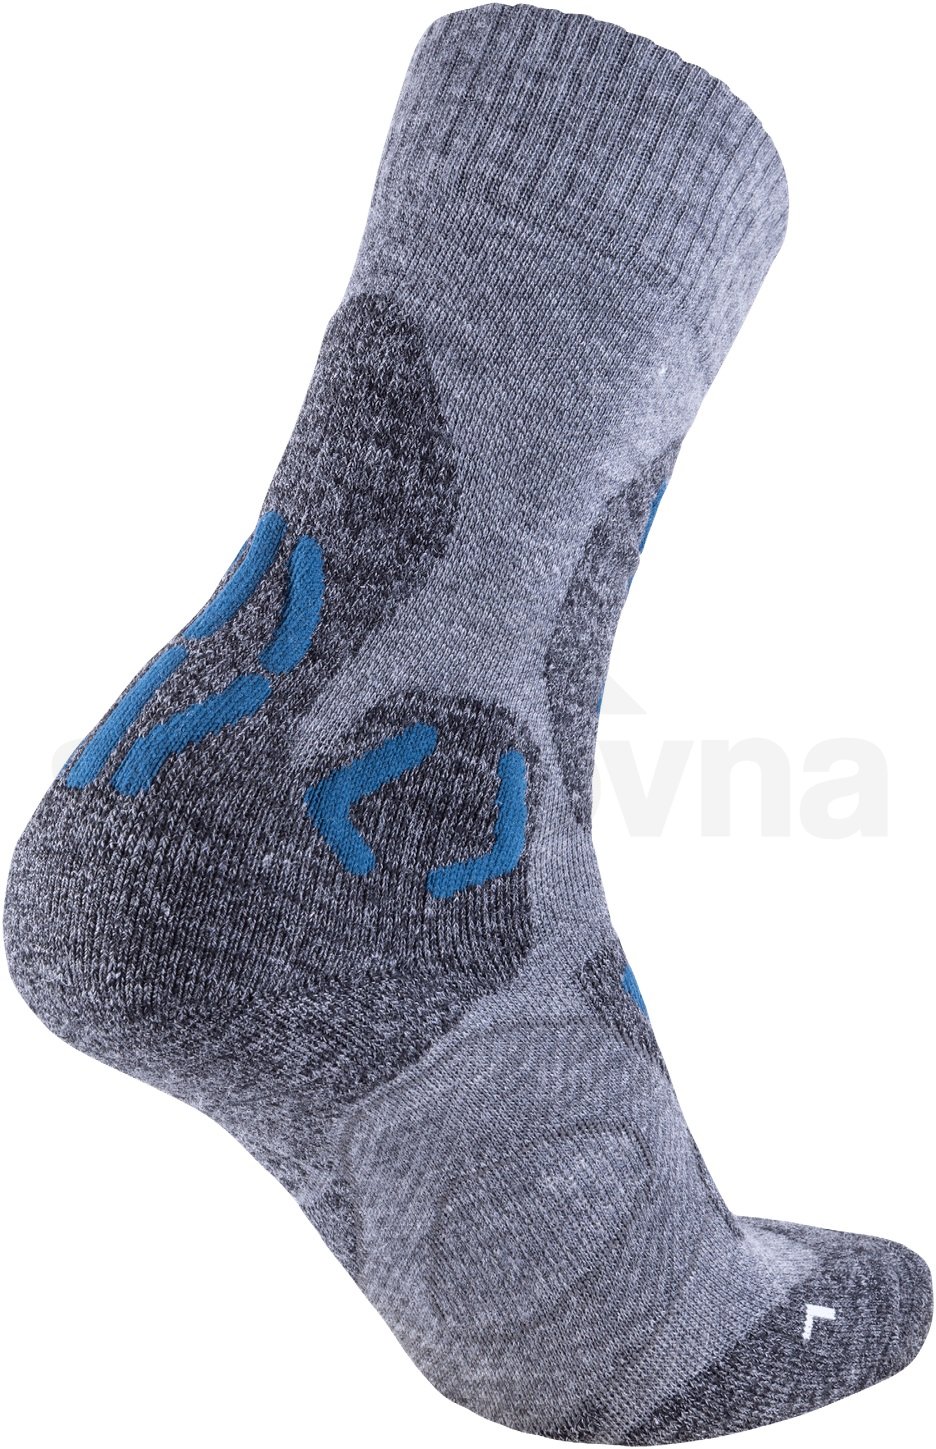 Ponožky UYN Trekking Winter Merino W - šedá/modrá